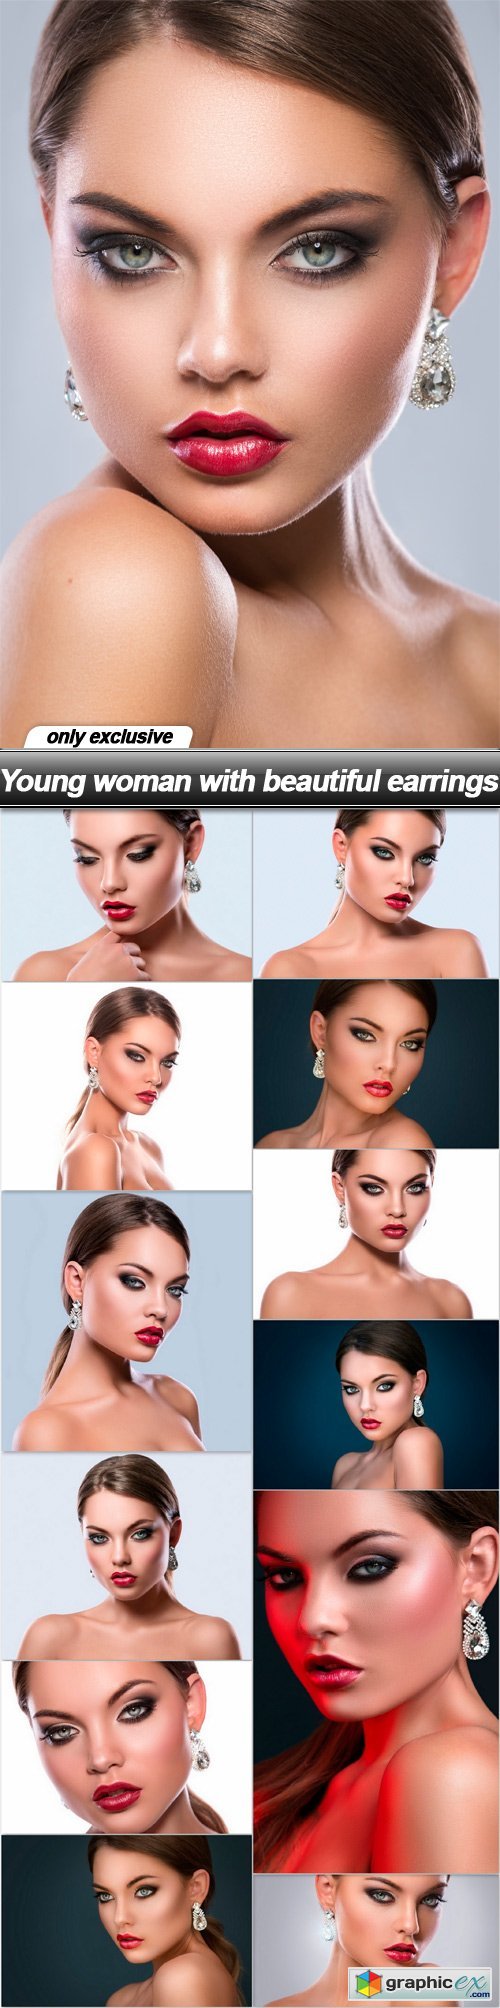 Young woman with beautiful earrings - 13 UHQ JPEG